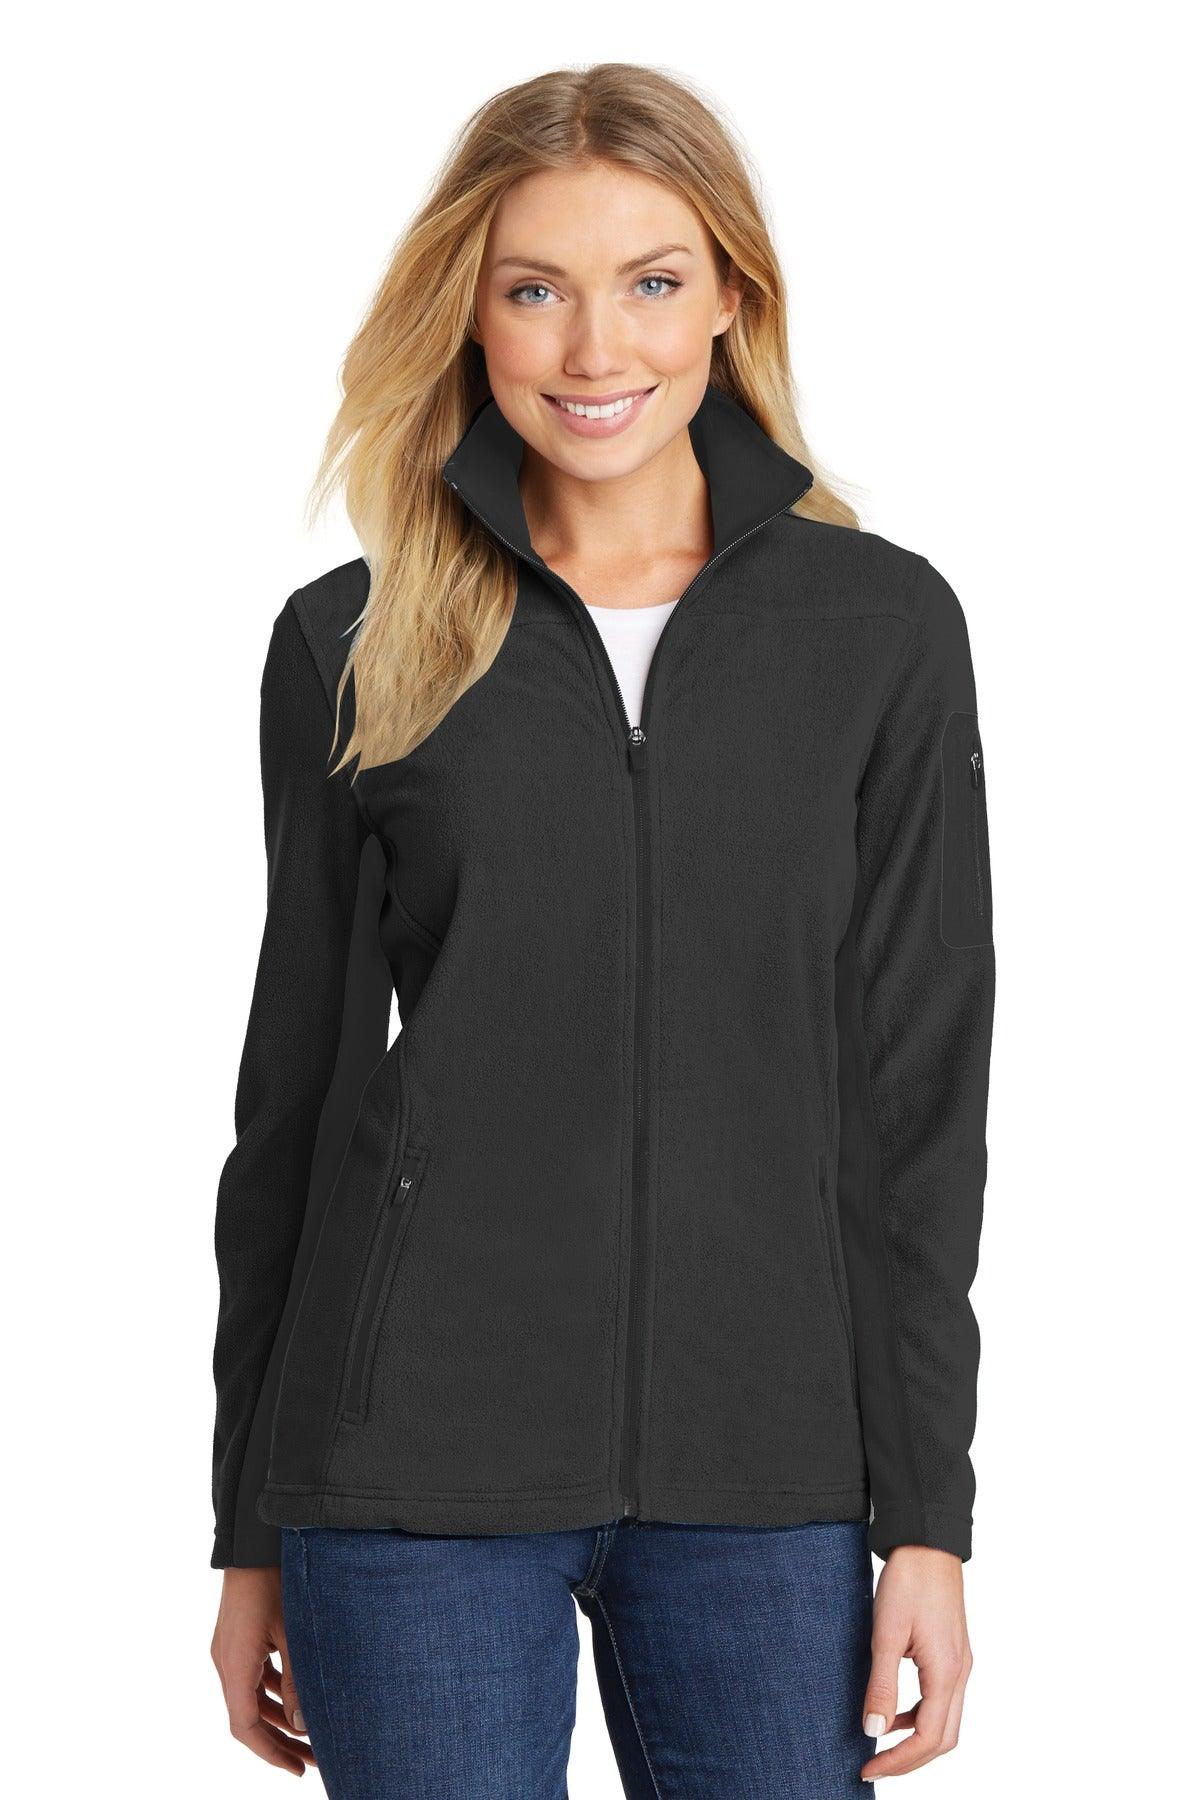 Port Authority Ladies Summit Fleece Full-Zip Jacket. L233 - Dresses Max